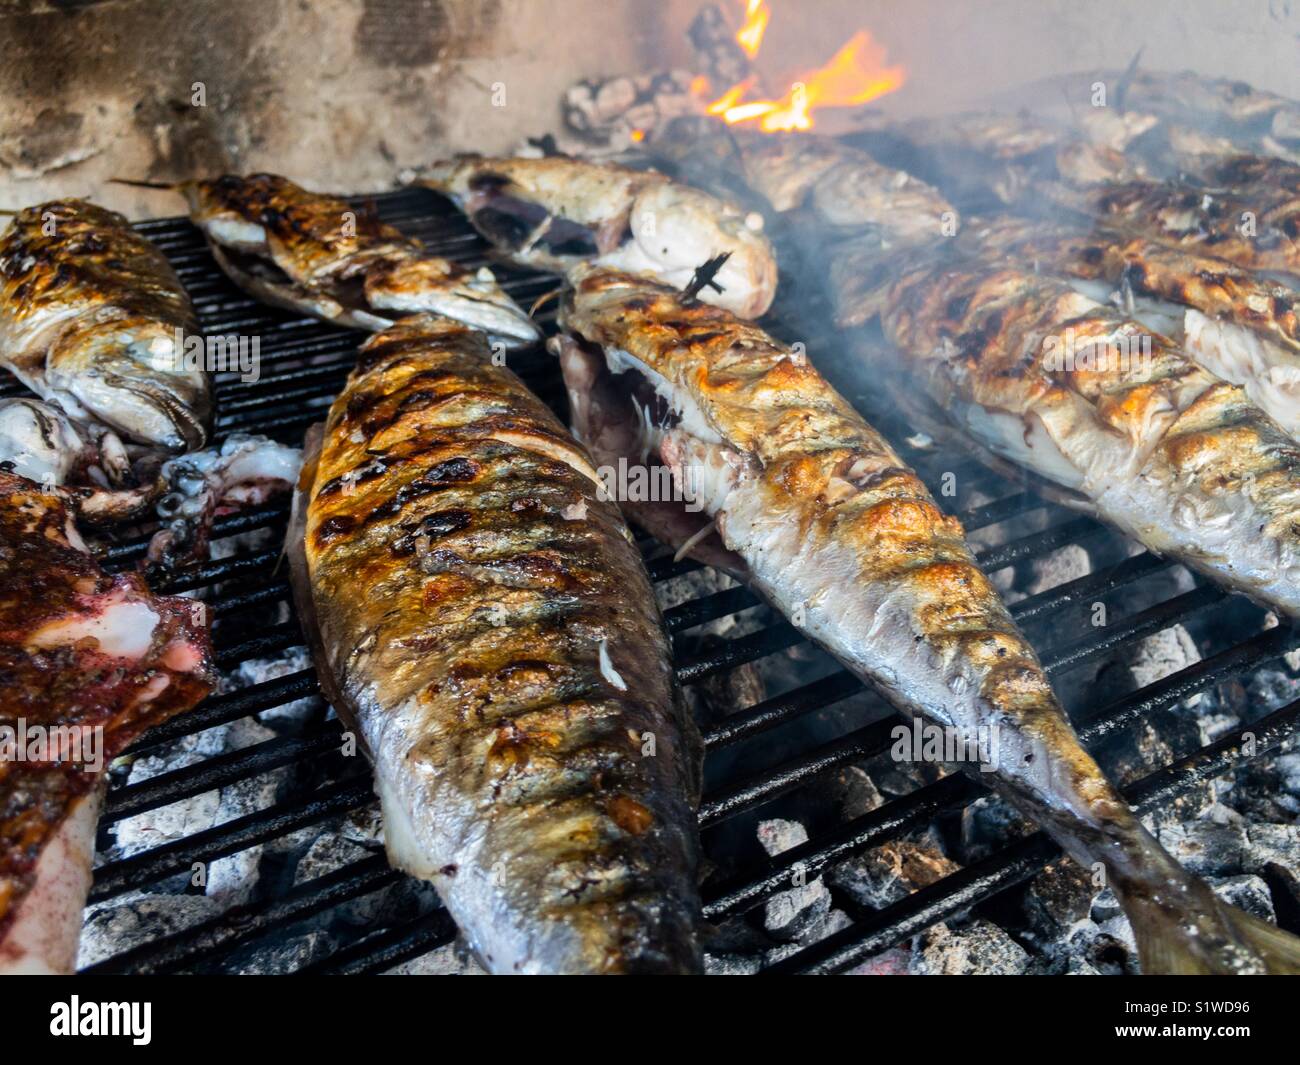 Mackerel fish on the grill close up Stock Photo